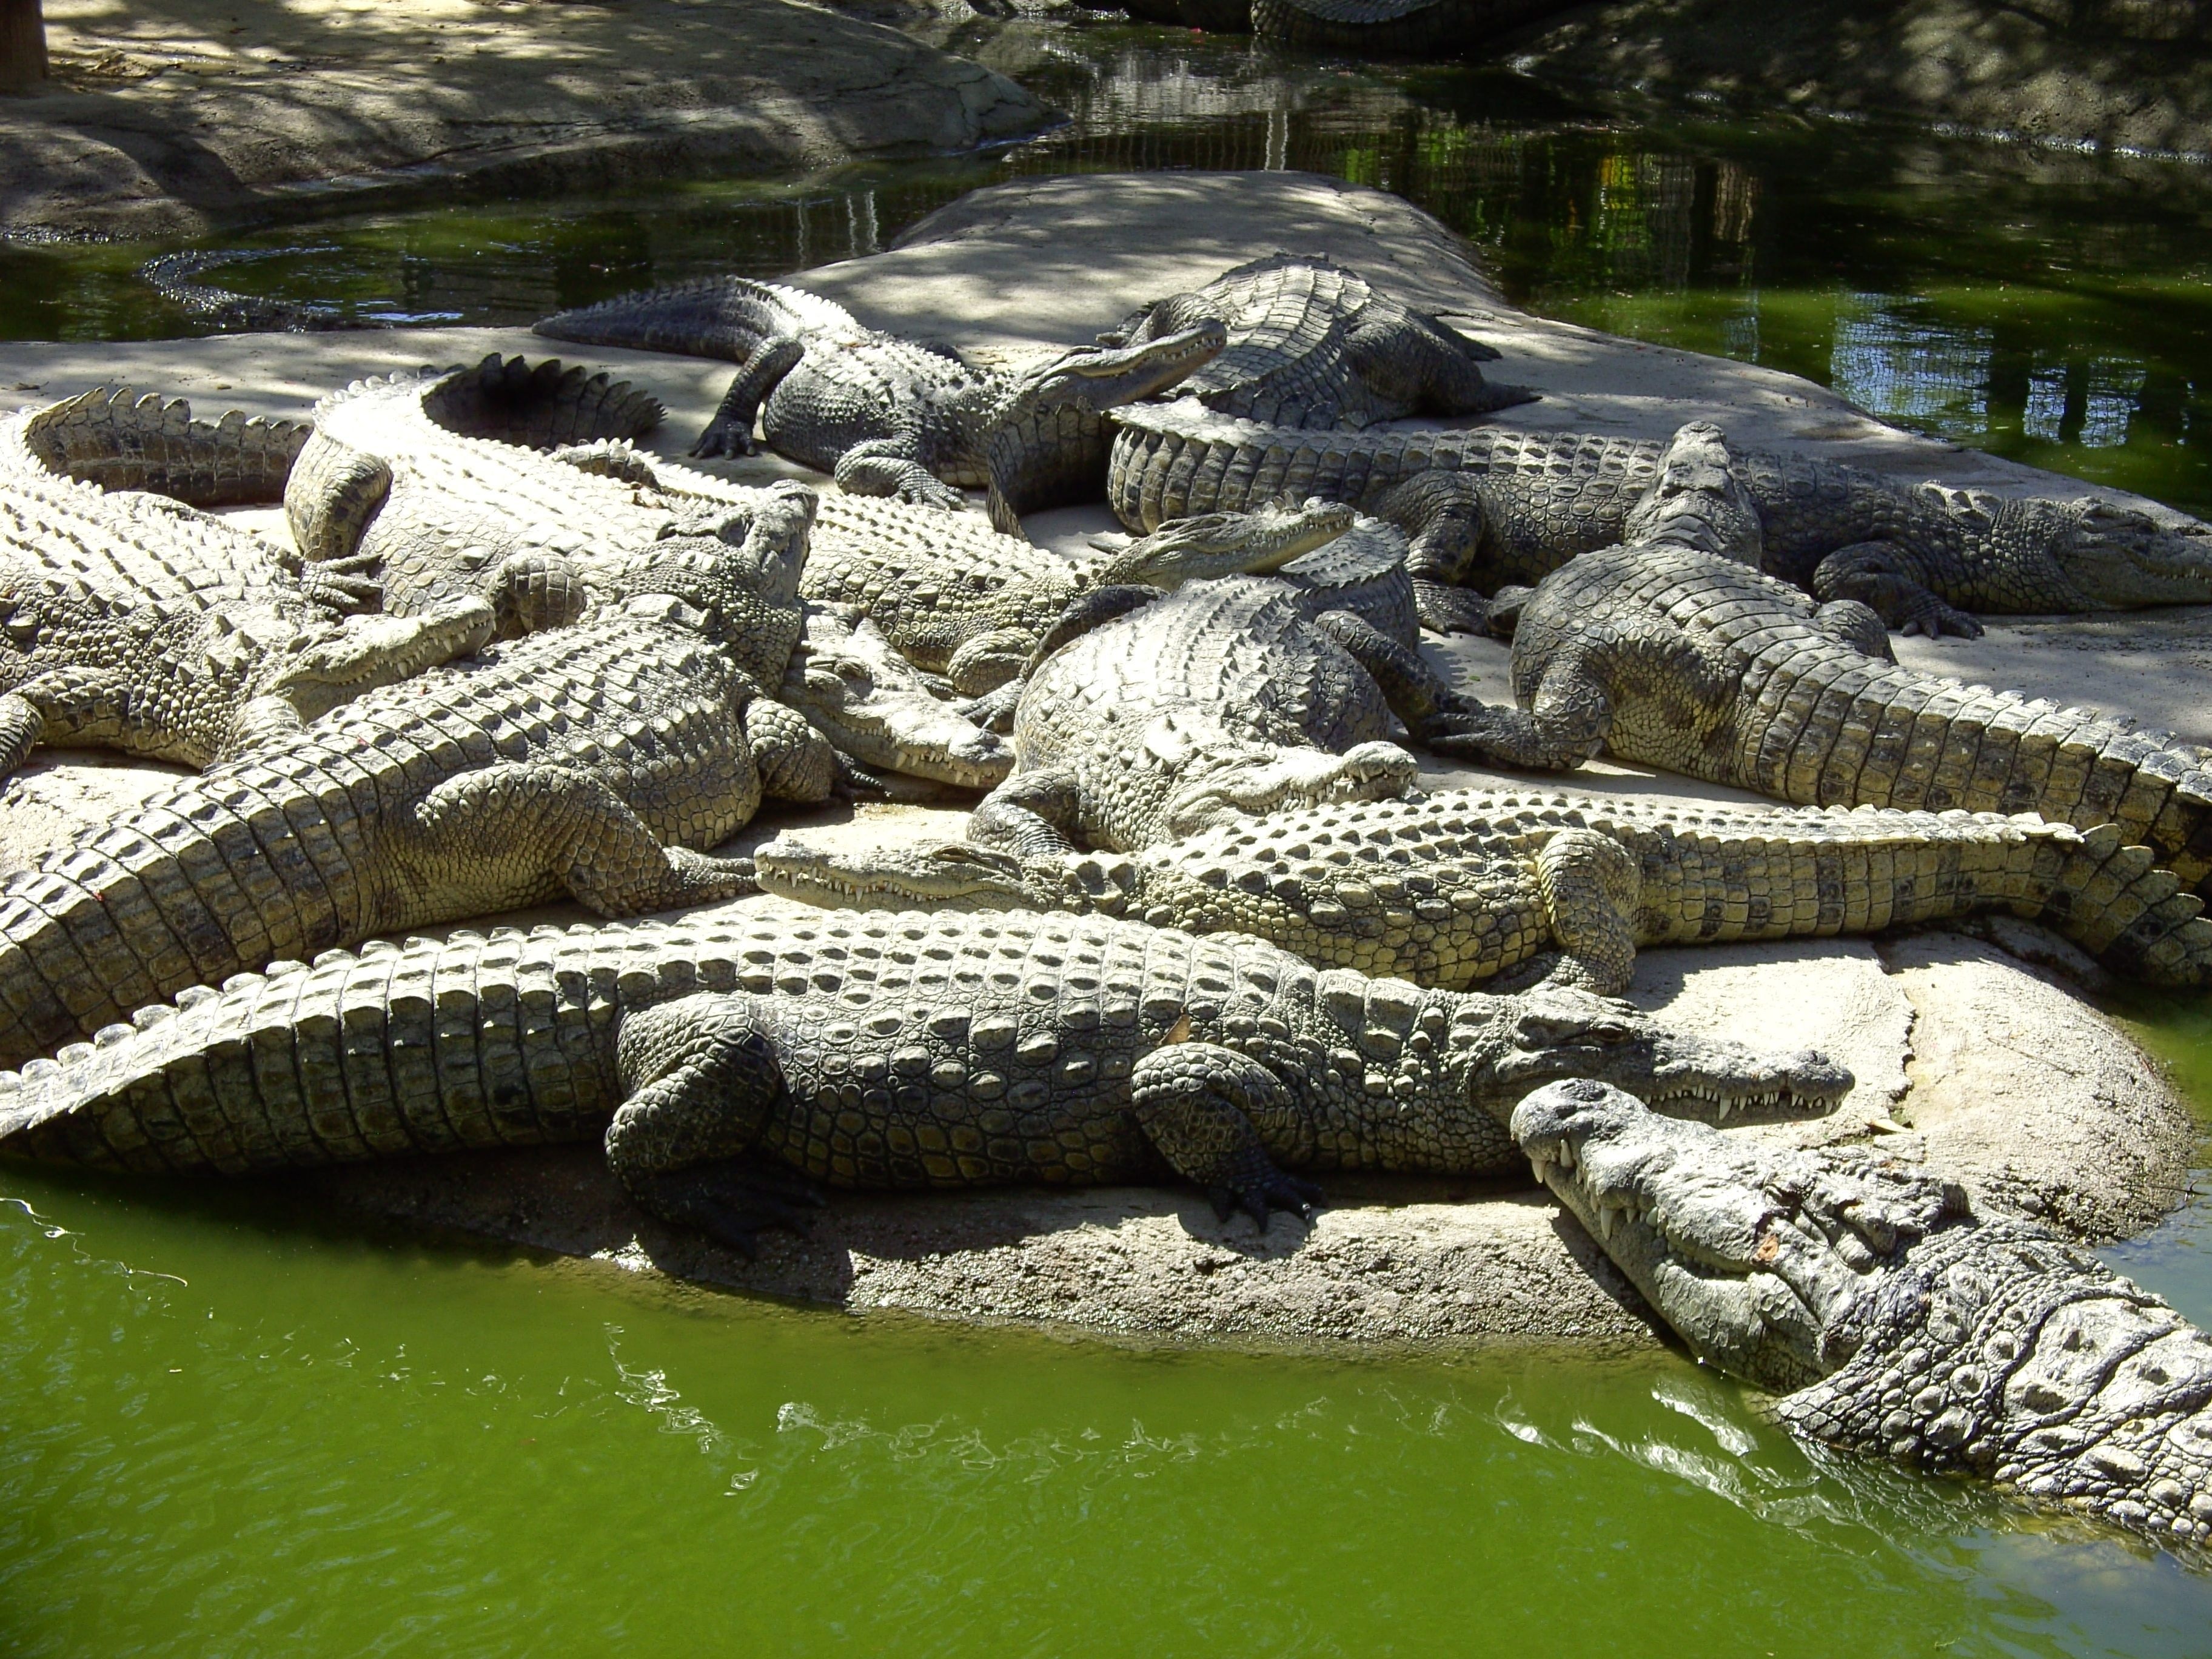 green crocodiles